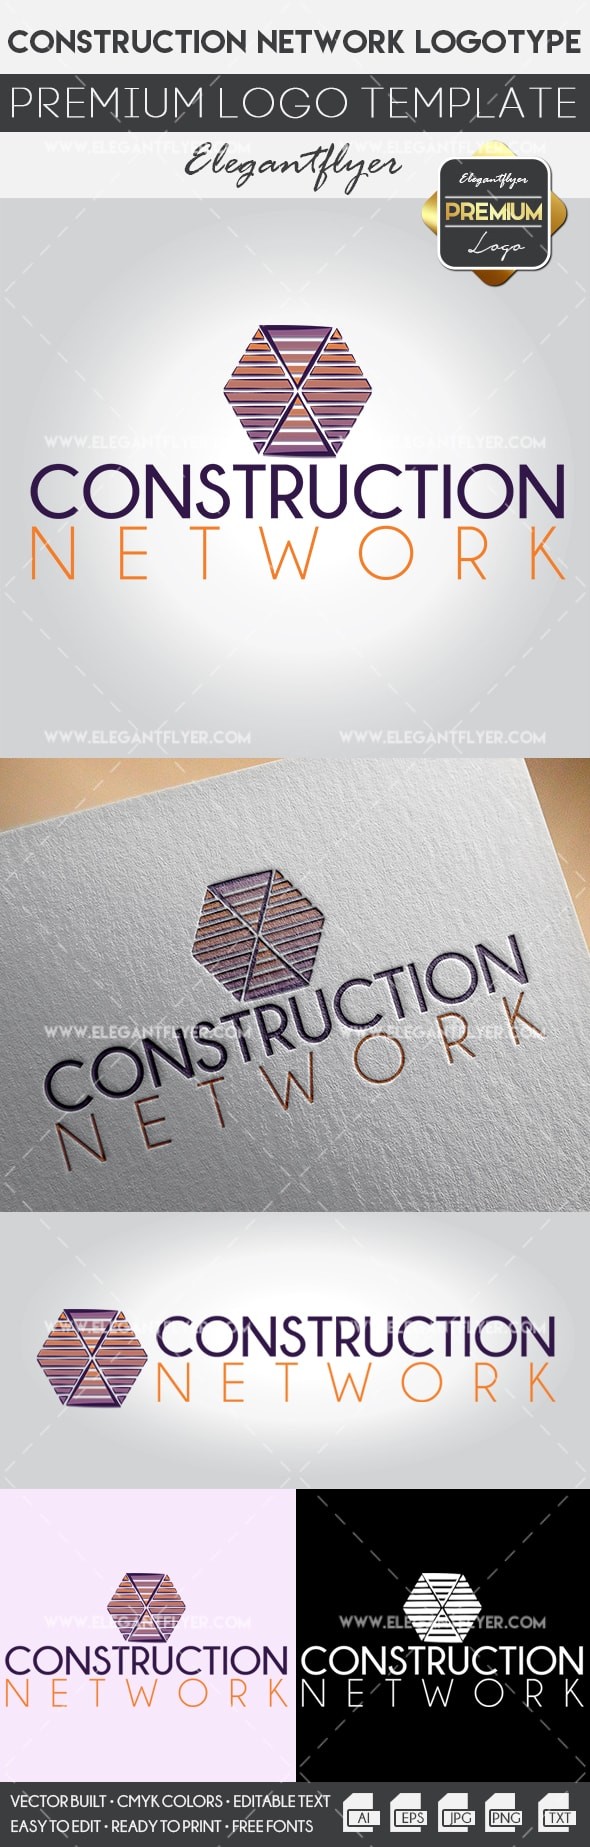 Construction Network by ElegantFlyer